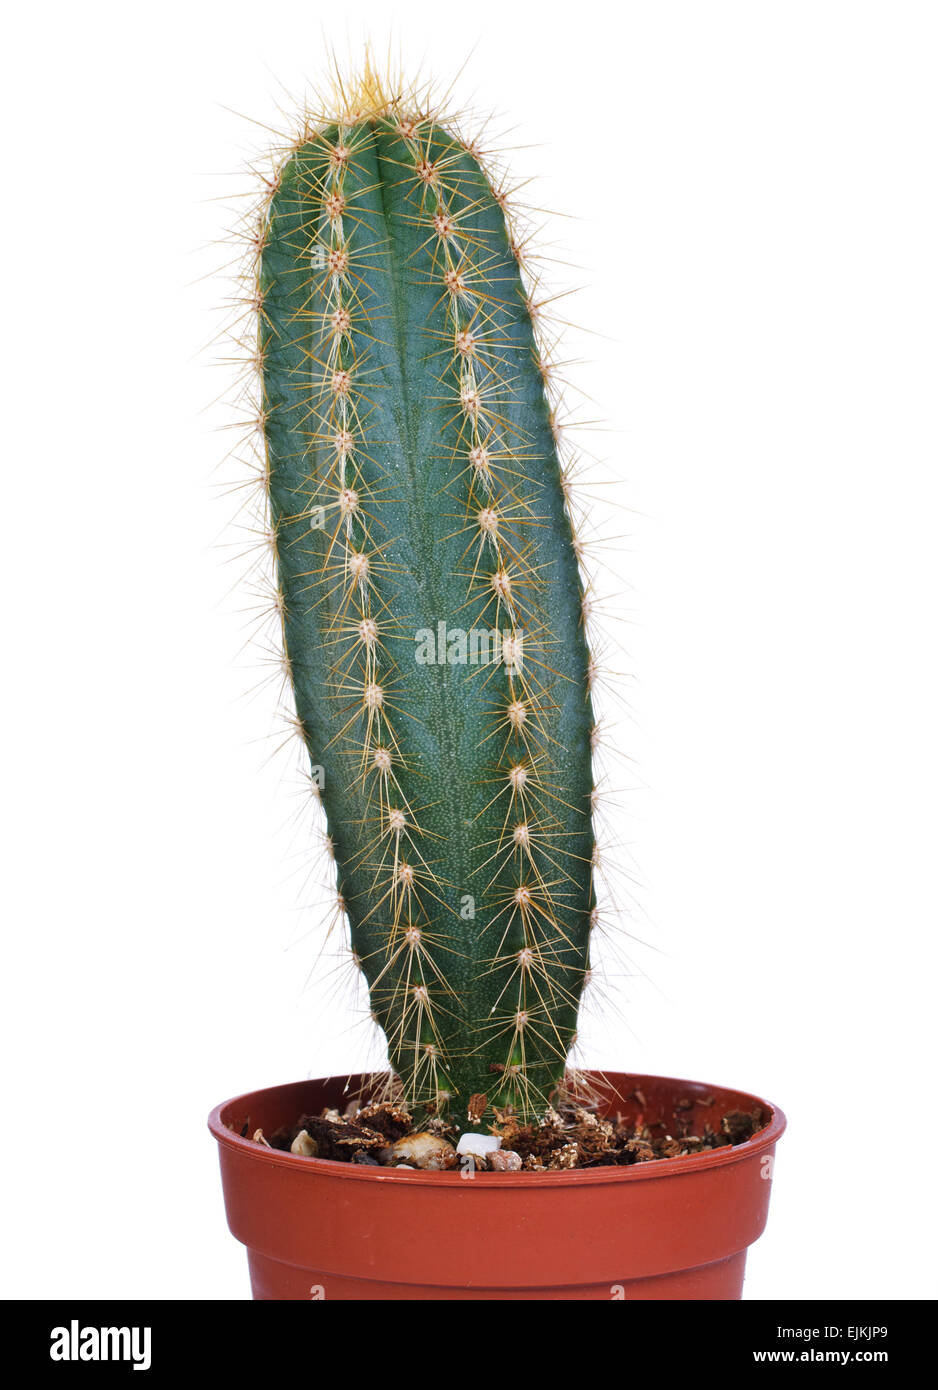 elongated decorative cactus Stock Photo